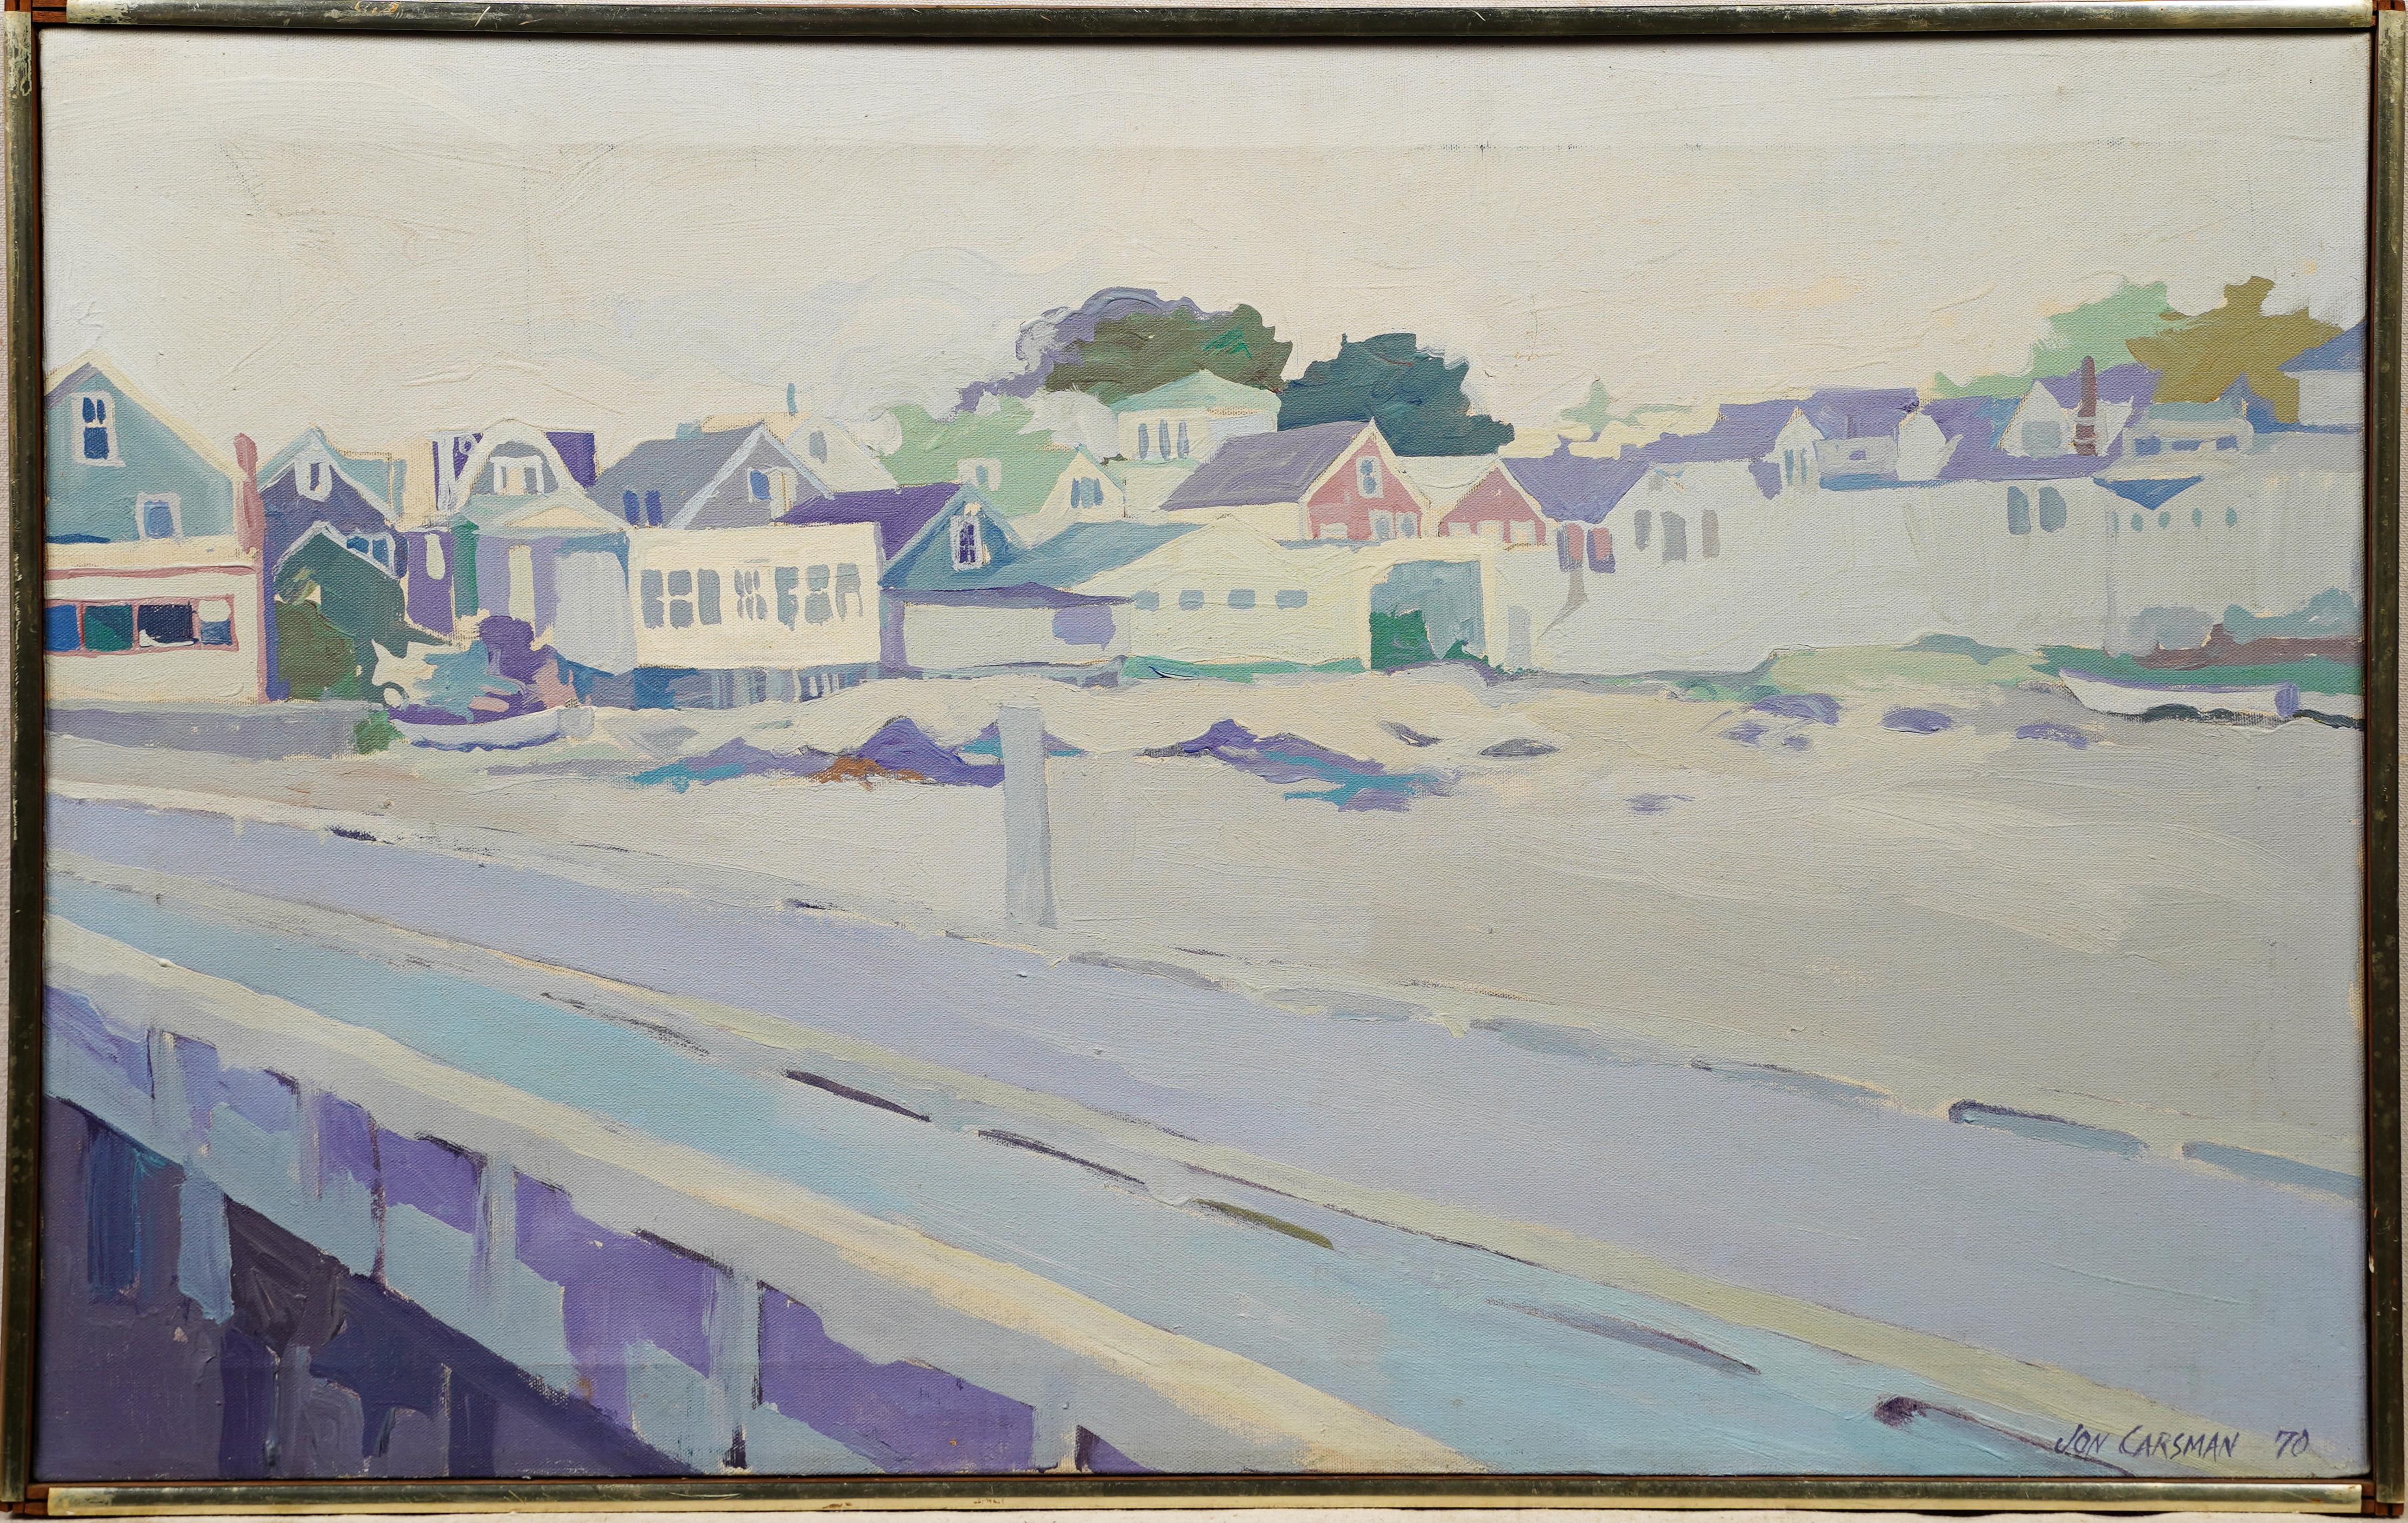 Jon Carsman  Landscape Painting -  New England Beach Town Fauvist Palette Modernist Framed Large Oil Painting